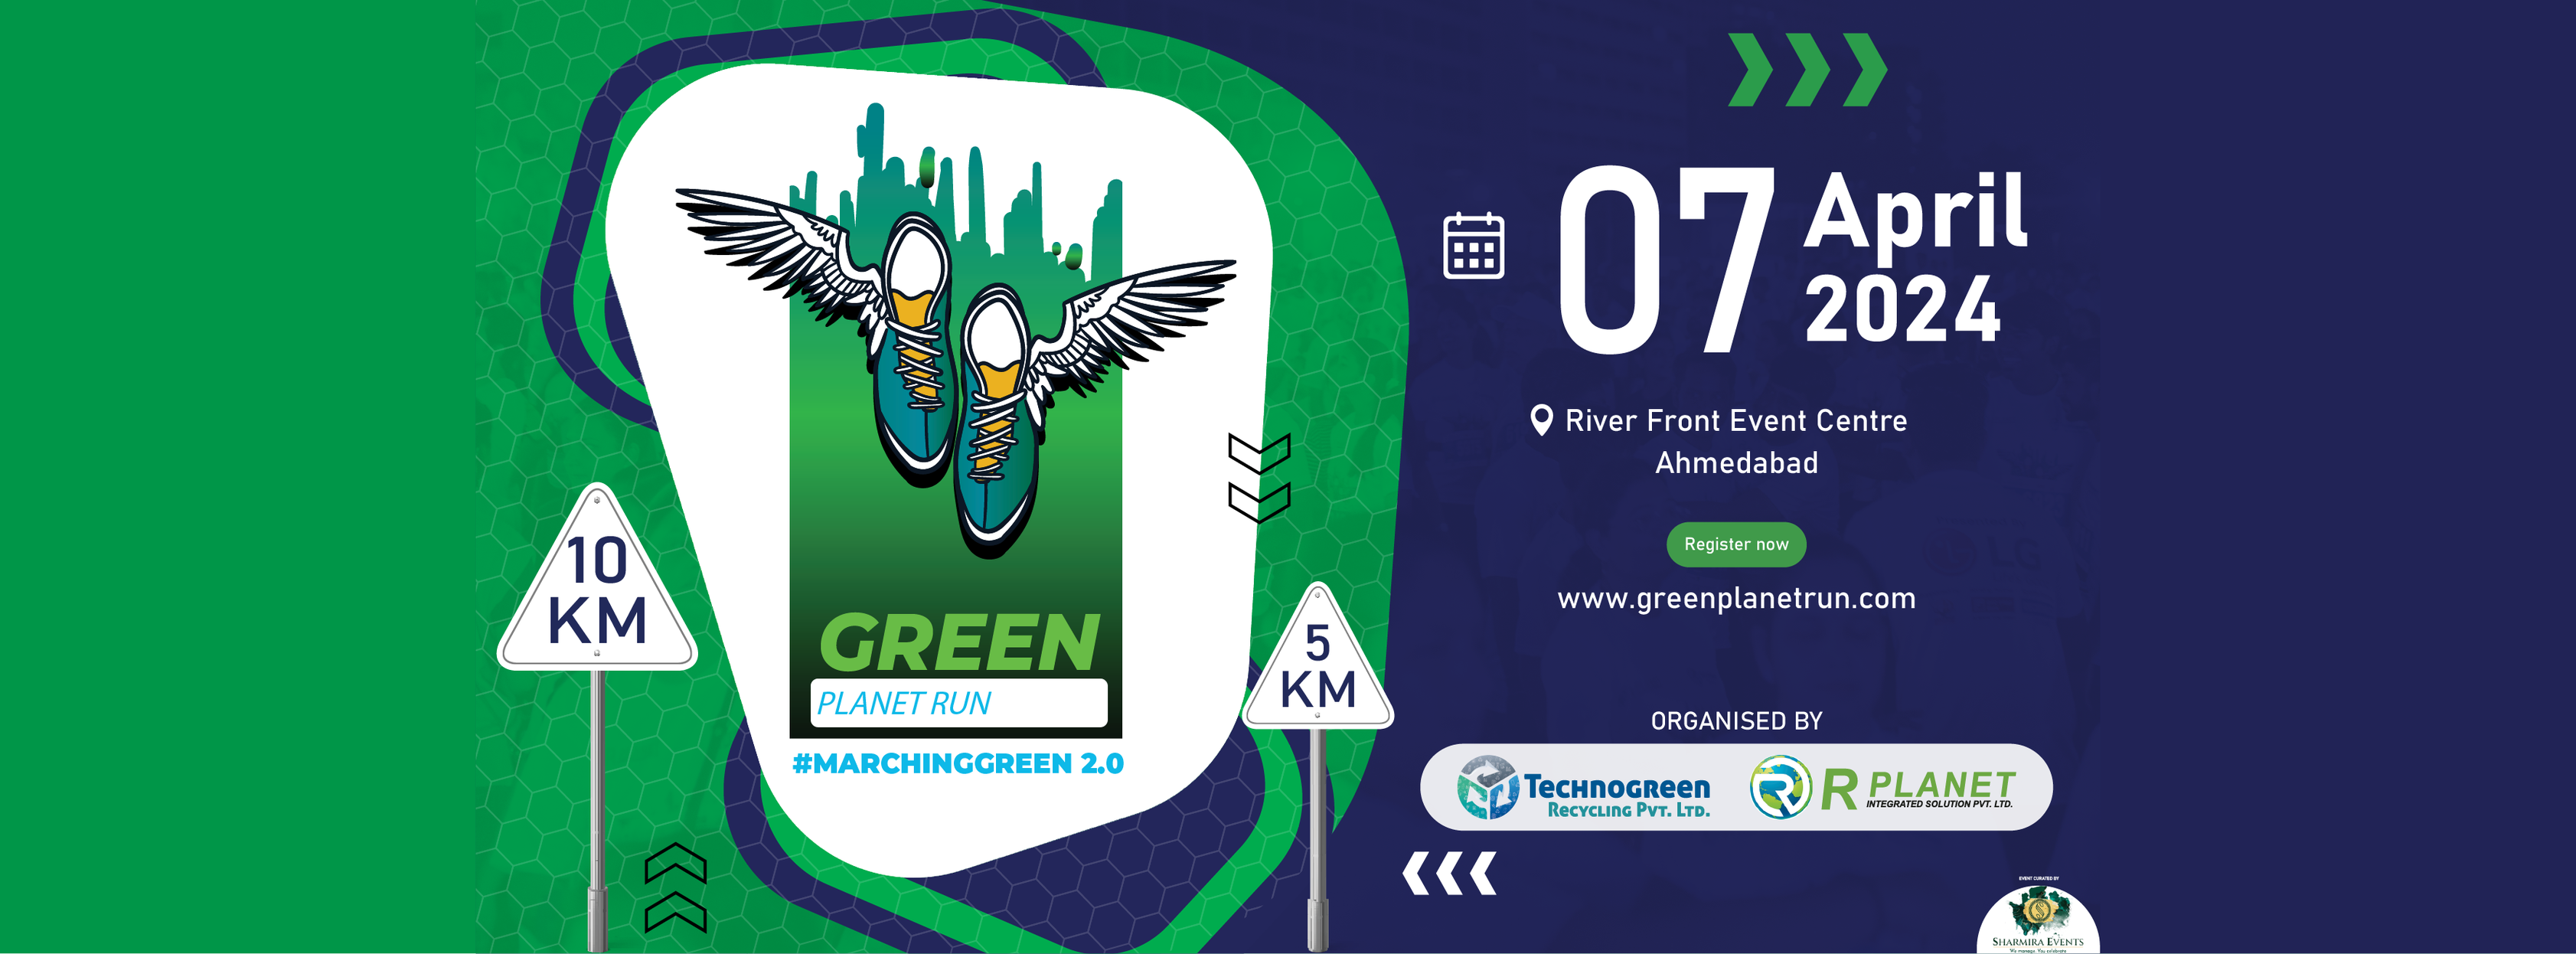 Green Planet Run 2024 - Marching Green 2.0